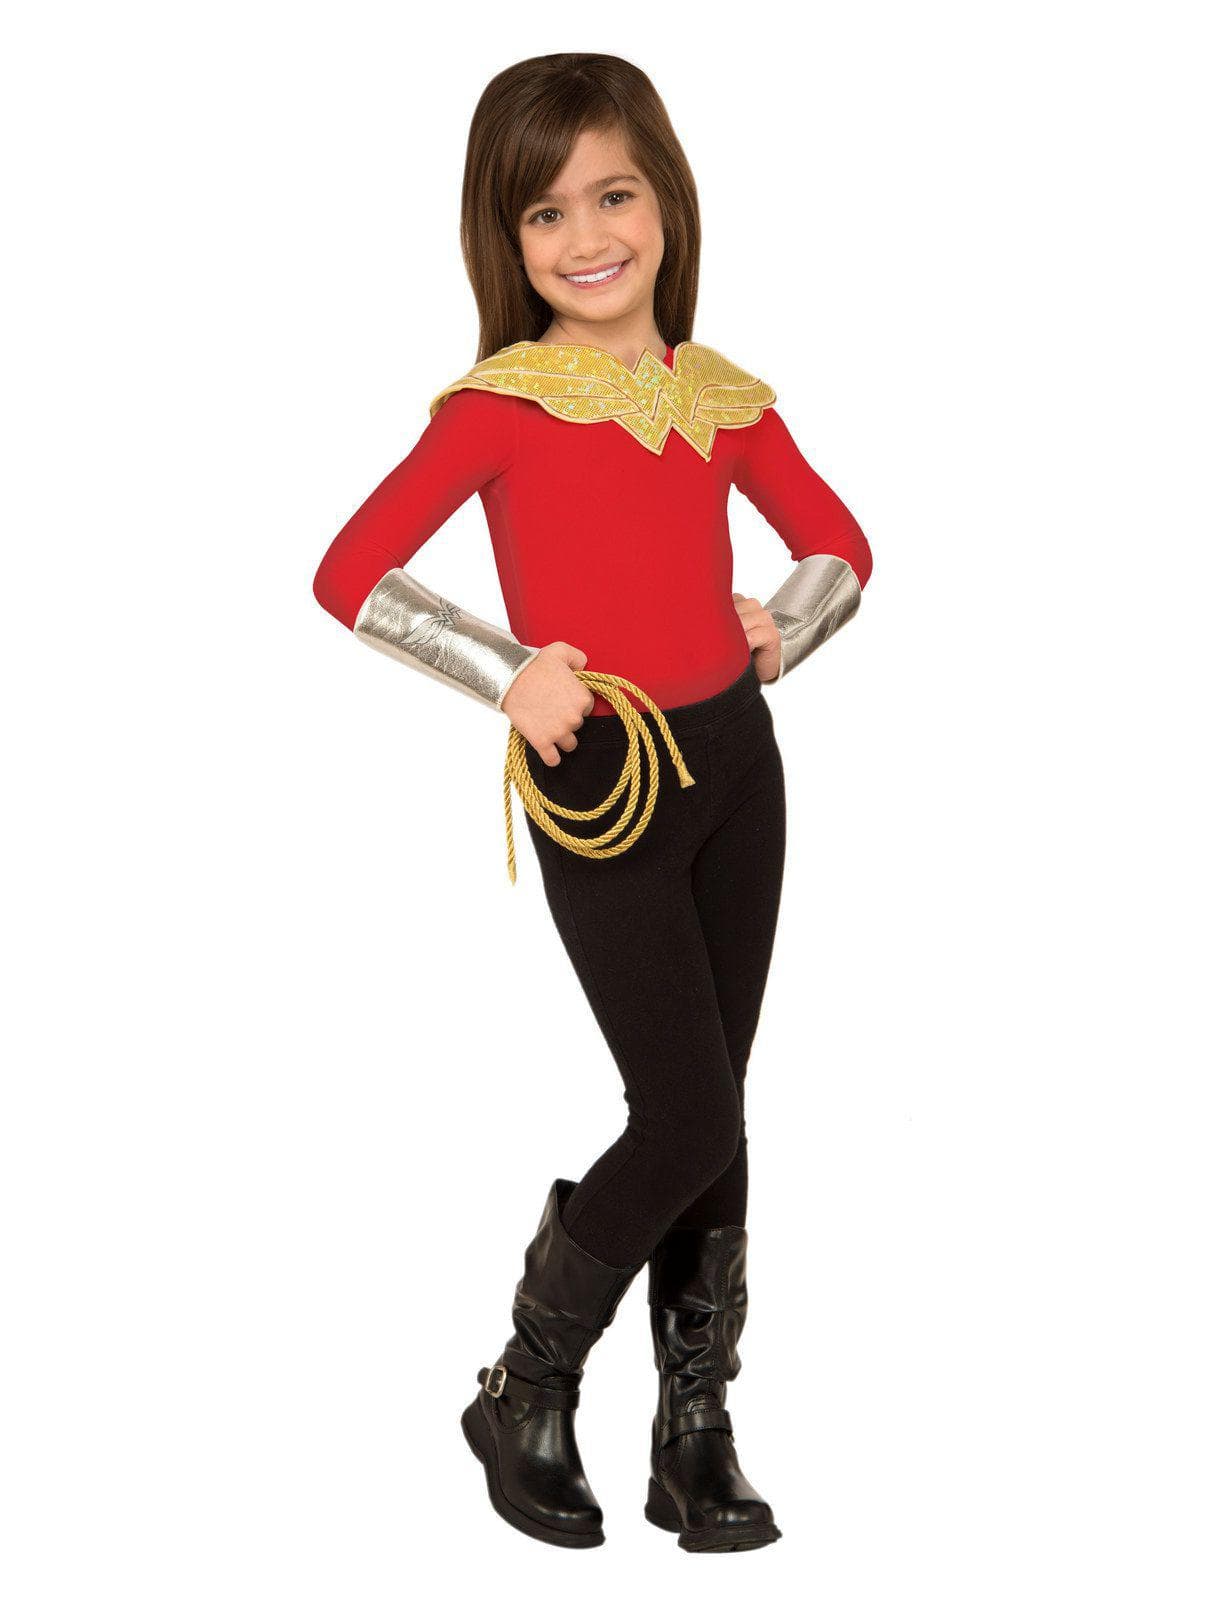 Girls' Justice League Wonder Woman Accessory Set - costumes.com